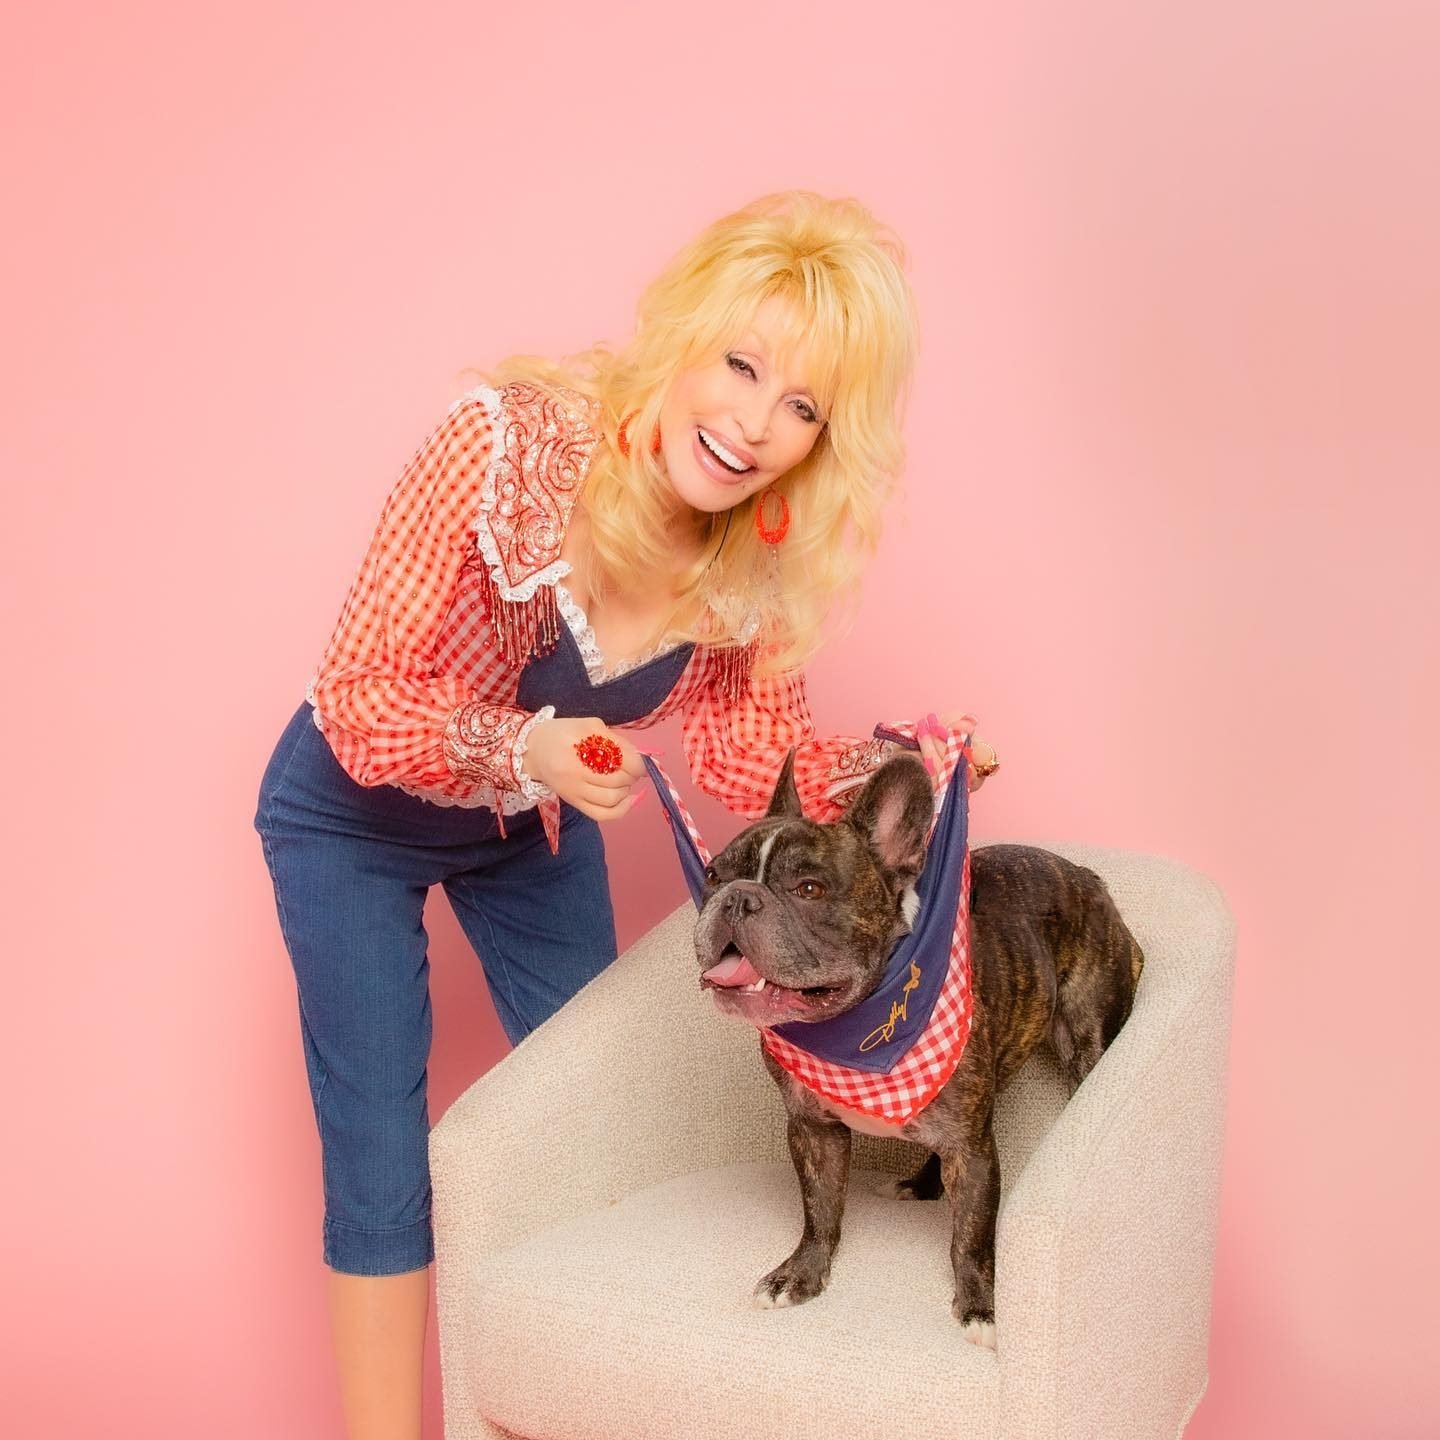 Dolly Parton Launches “Doggy Parton” Pet Accessories